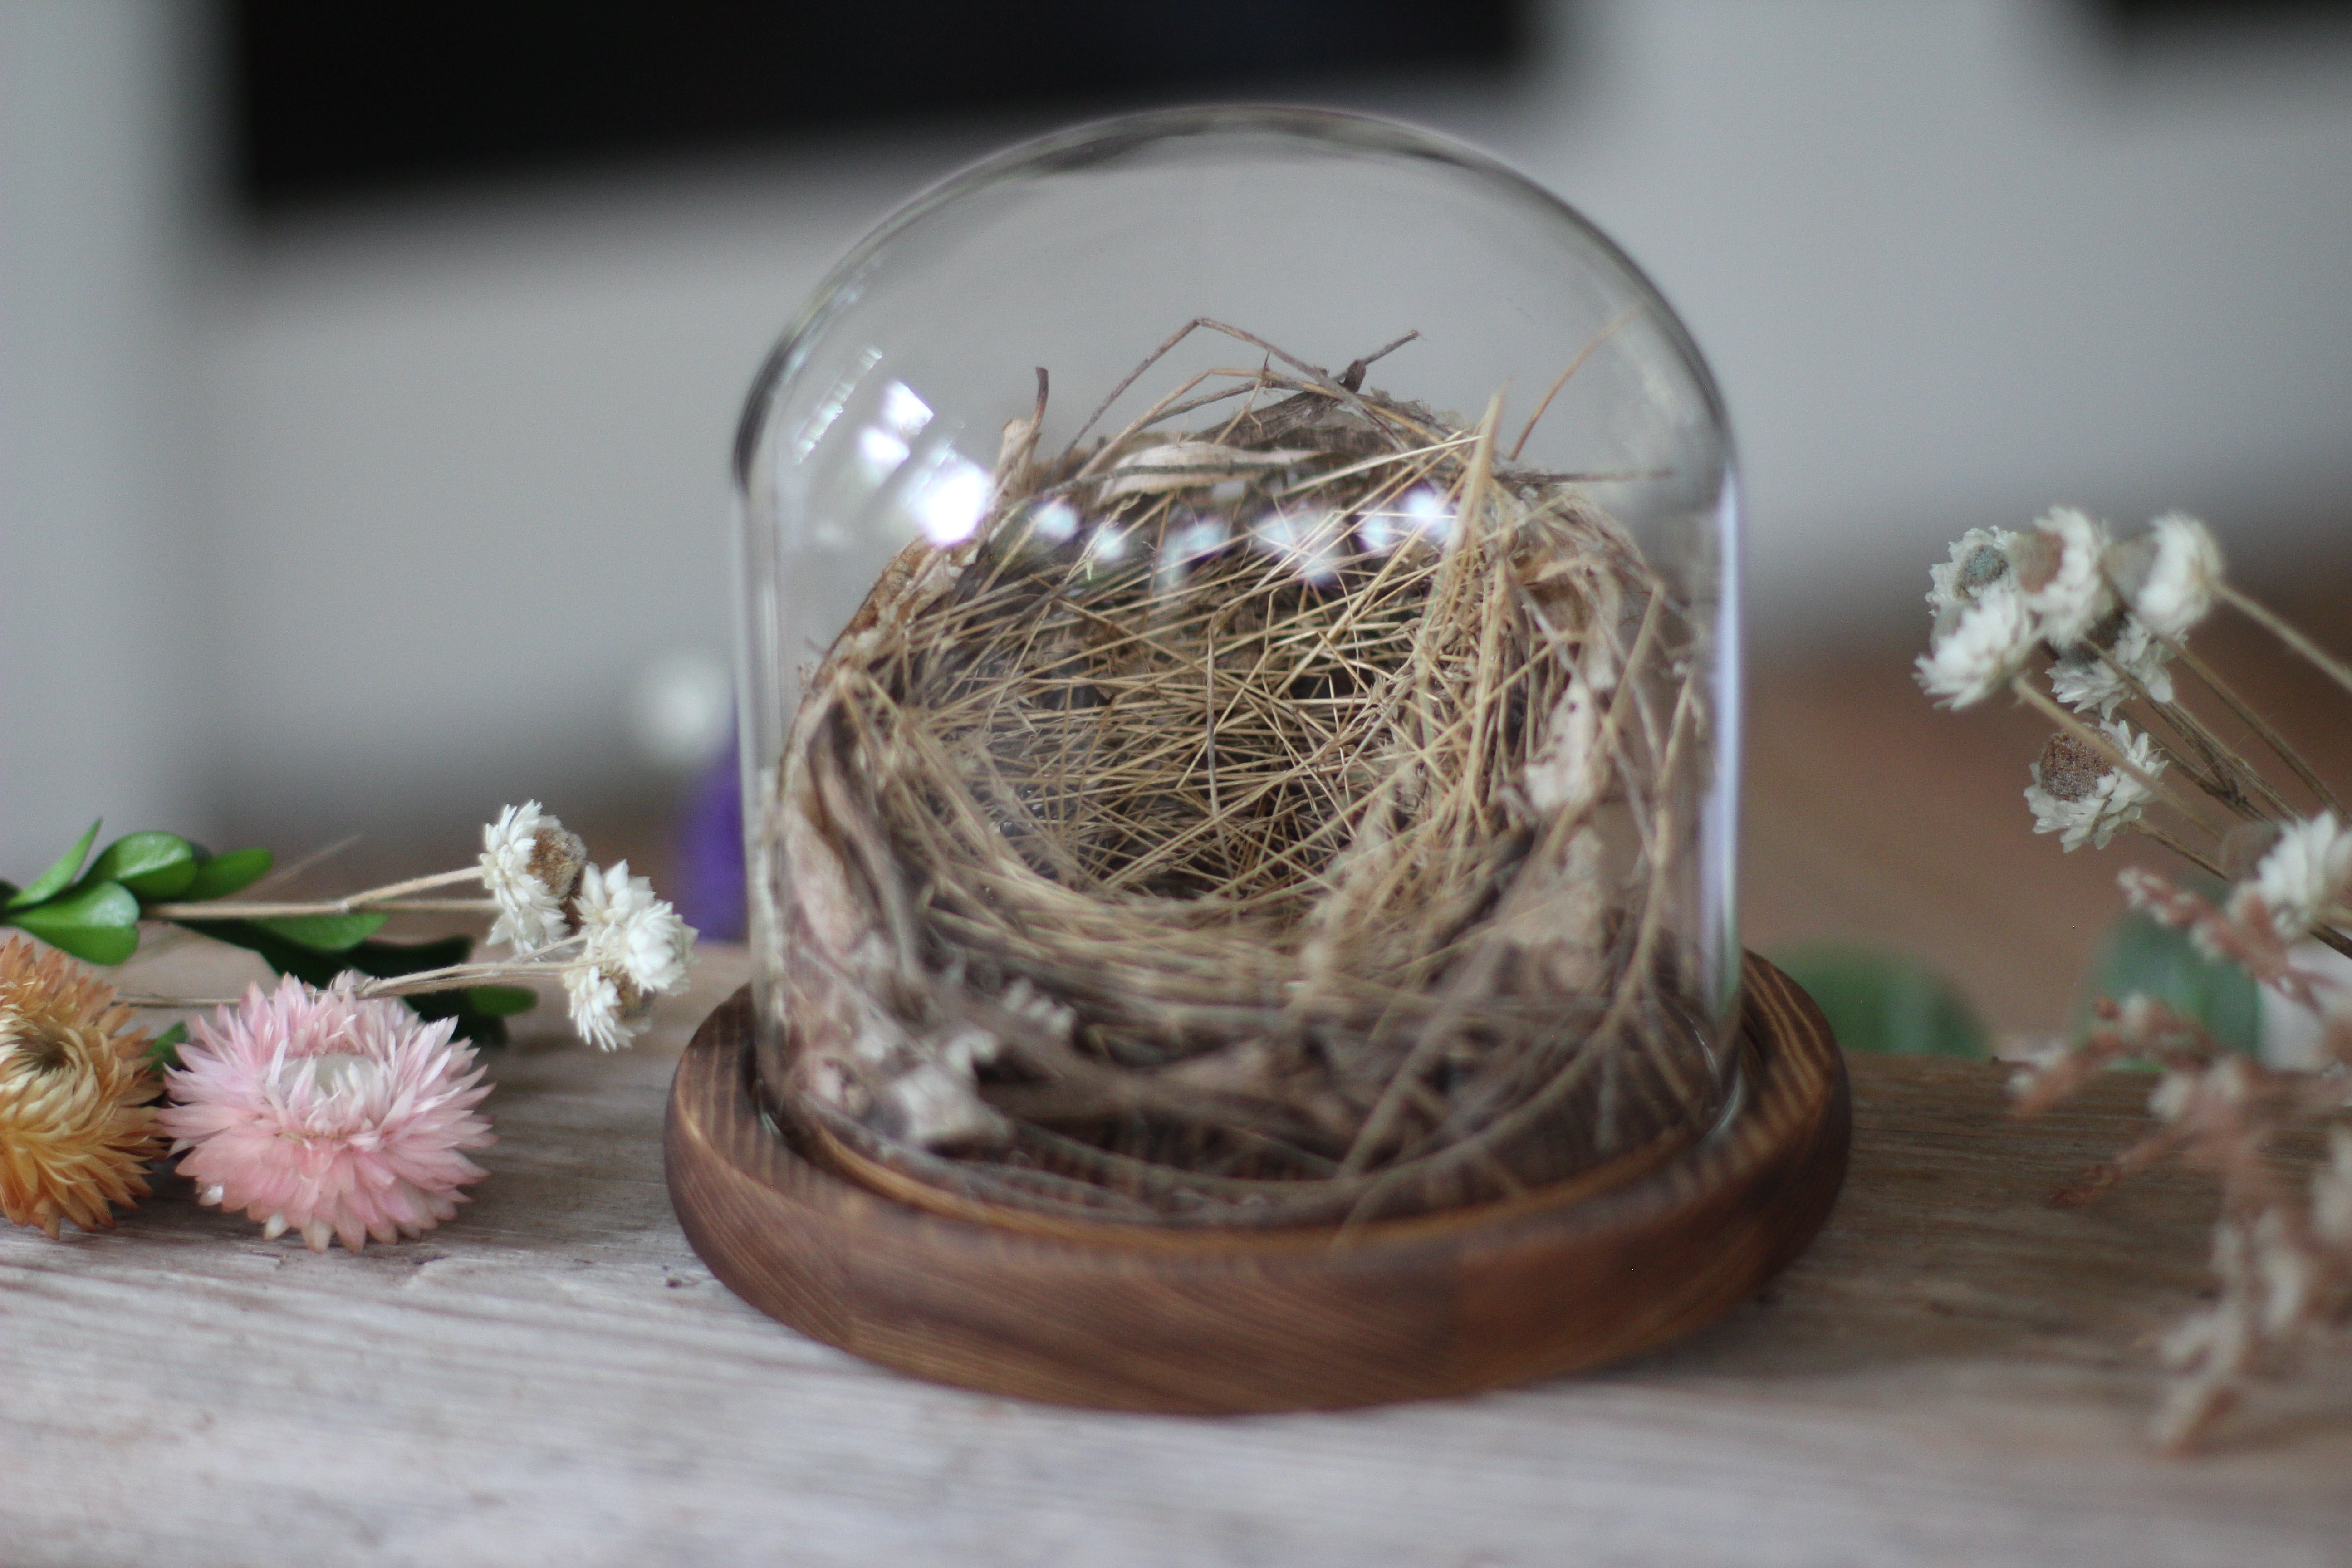 Medium Dome / Cloche With Bird’s Nest